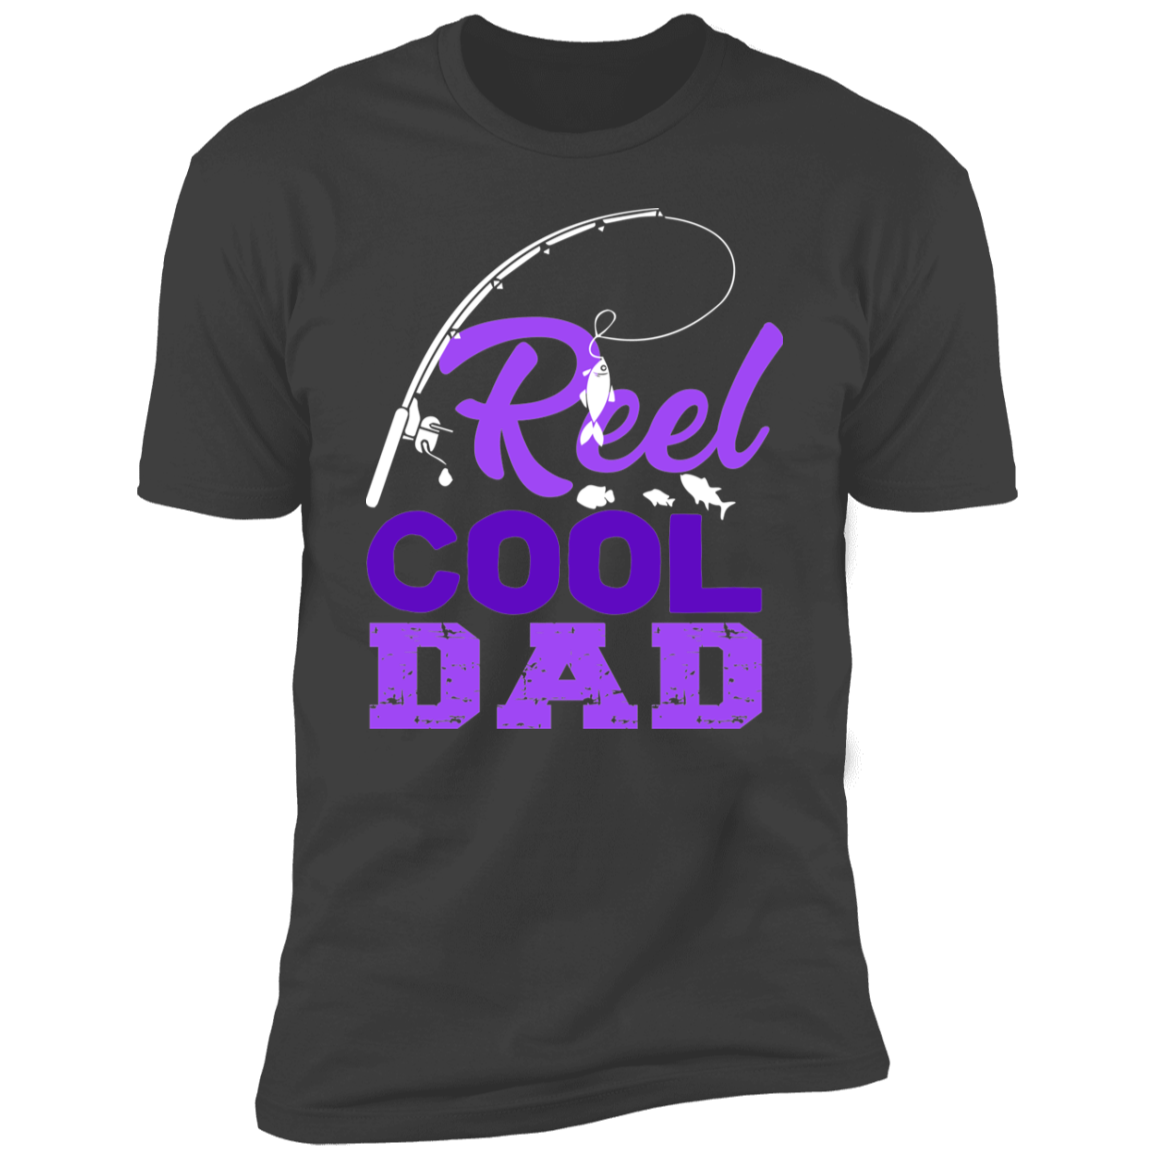 REEL COOL DAD- Short Sleeve T-Shirt